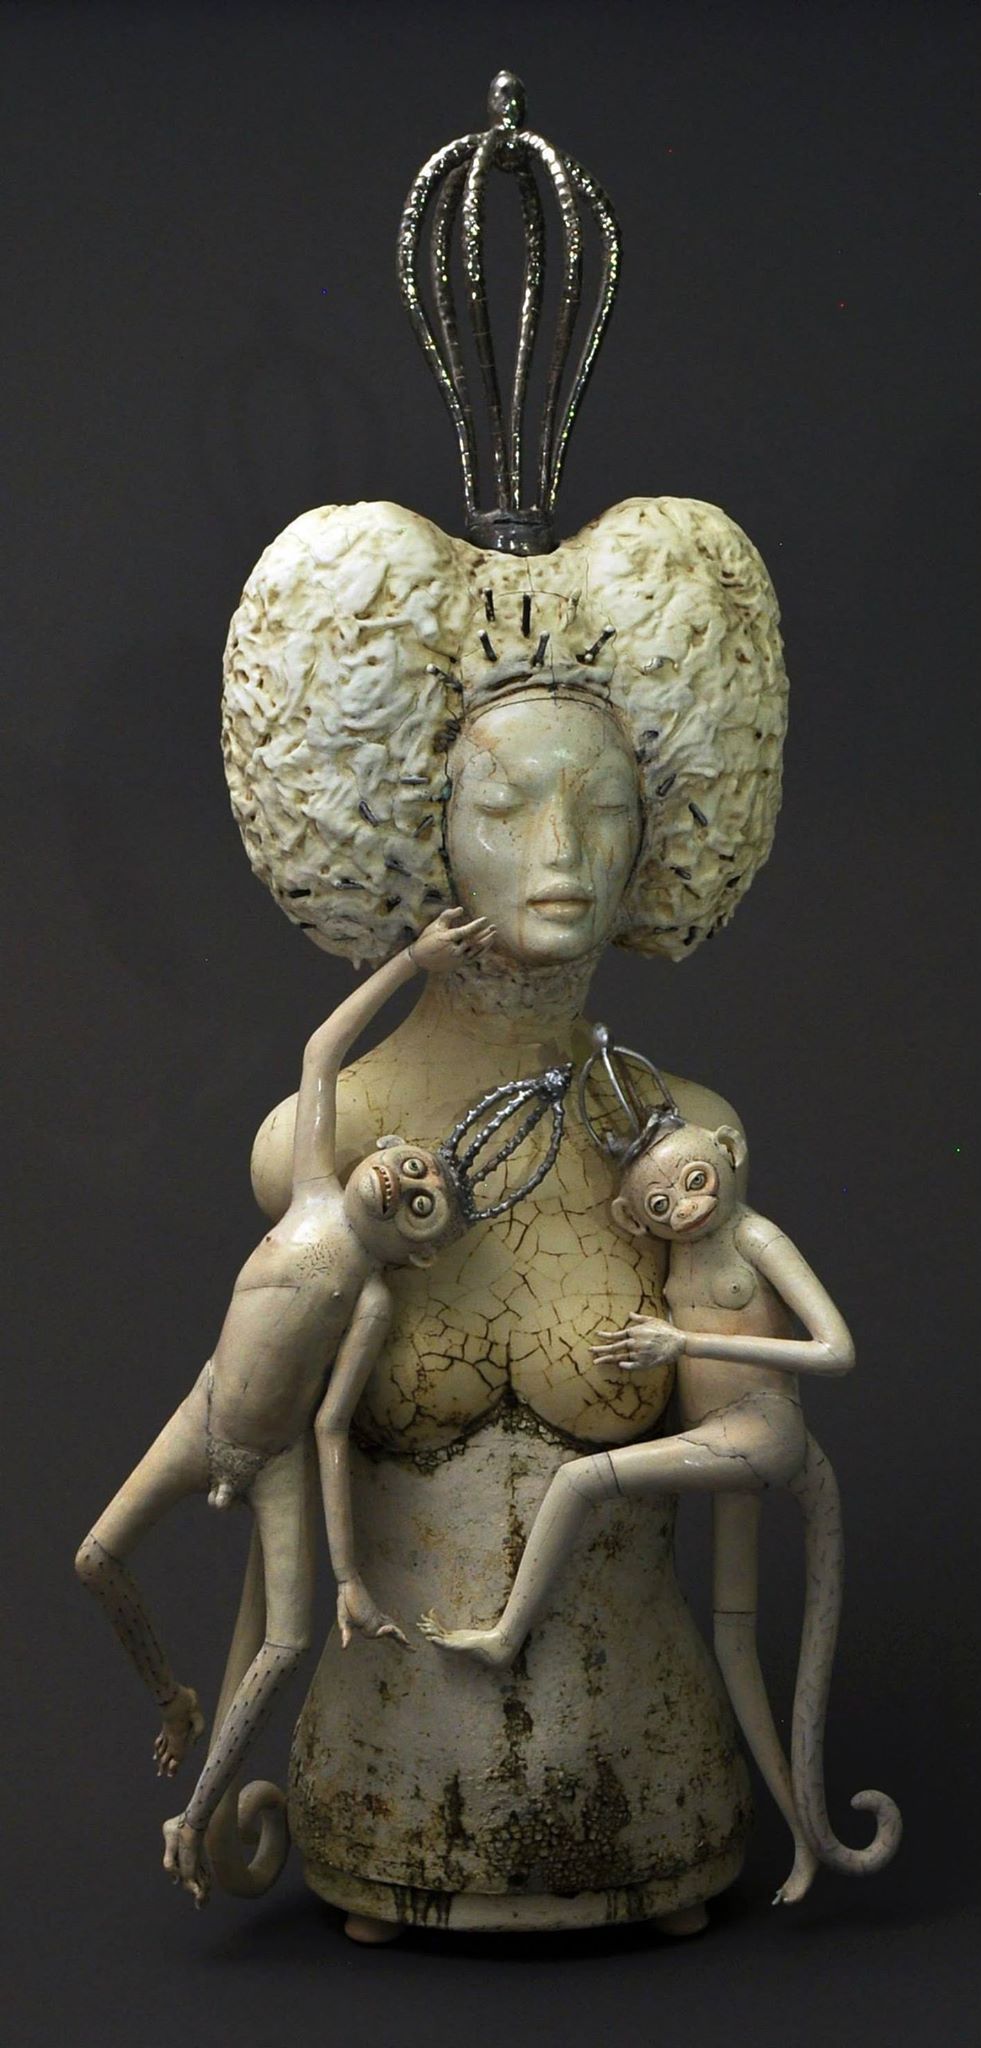 Lisa Clague – sculpture Seductive dream